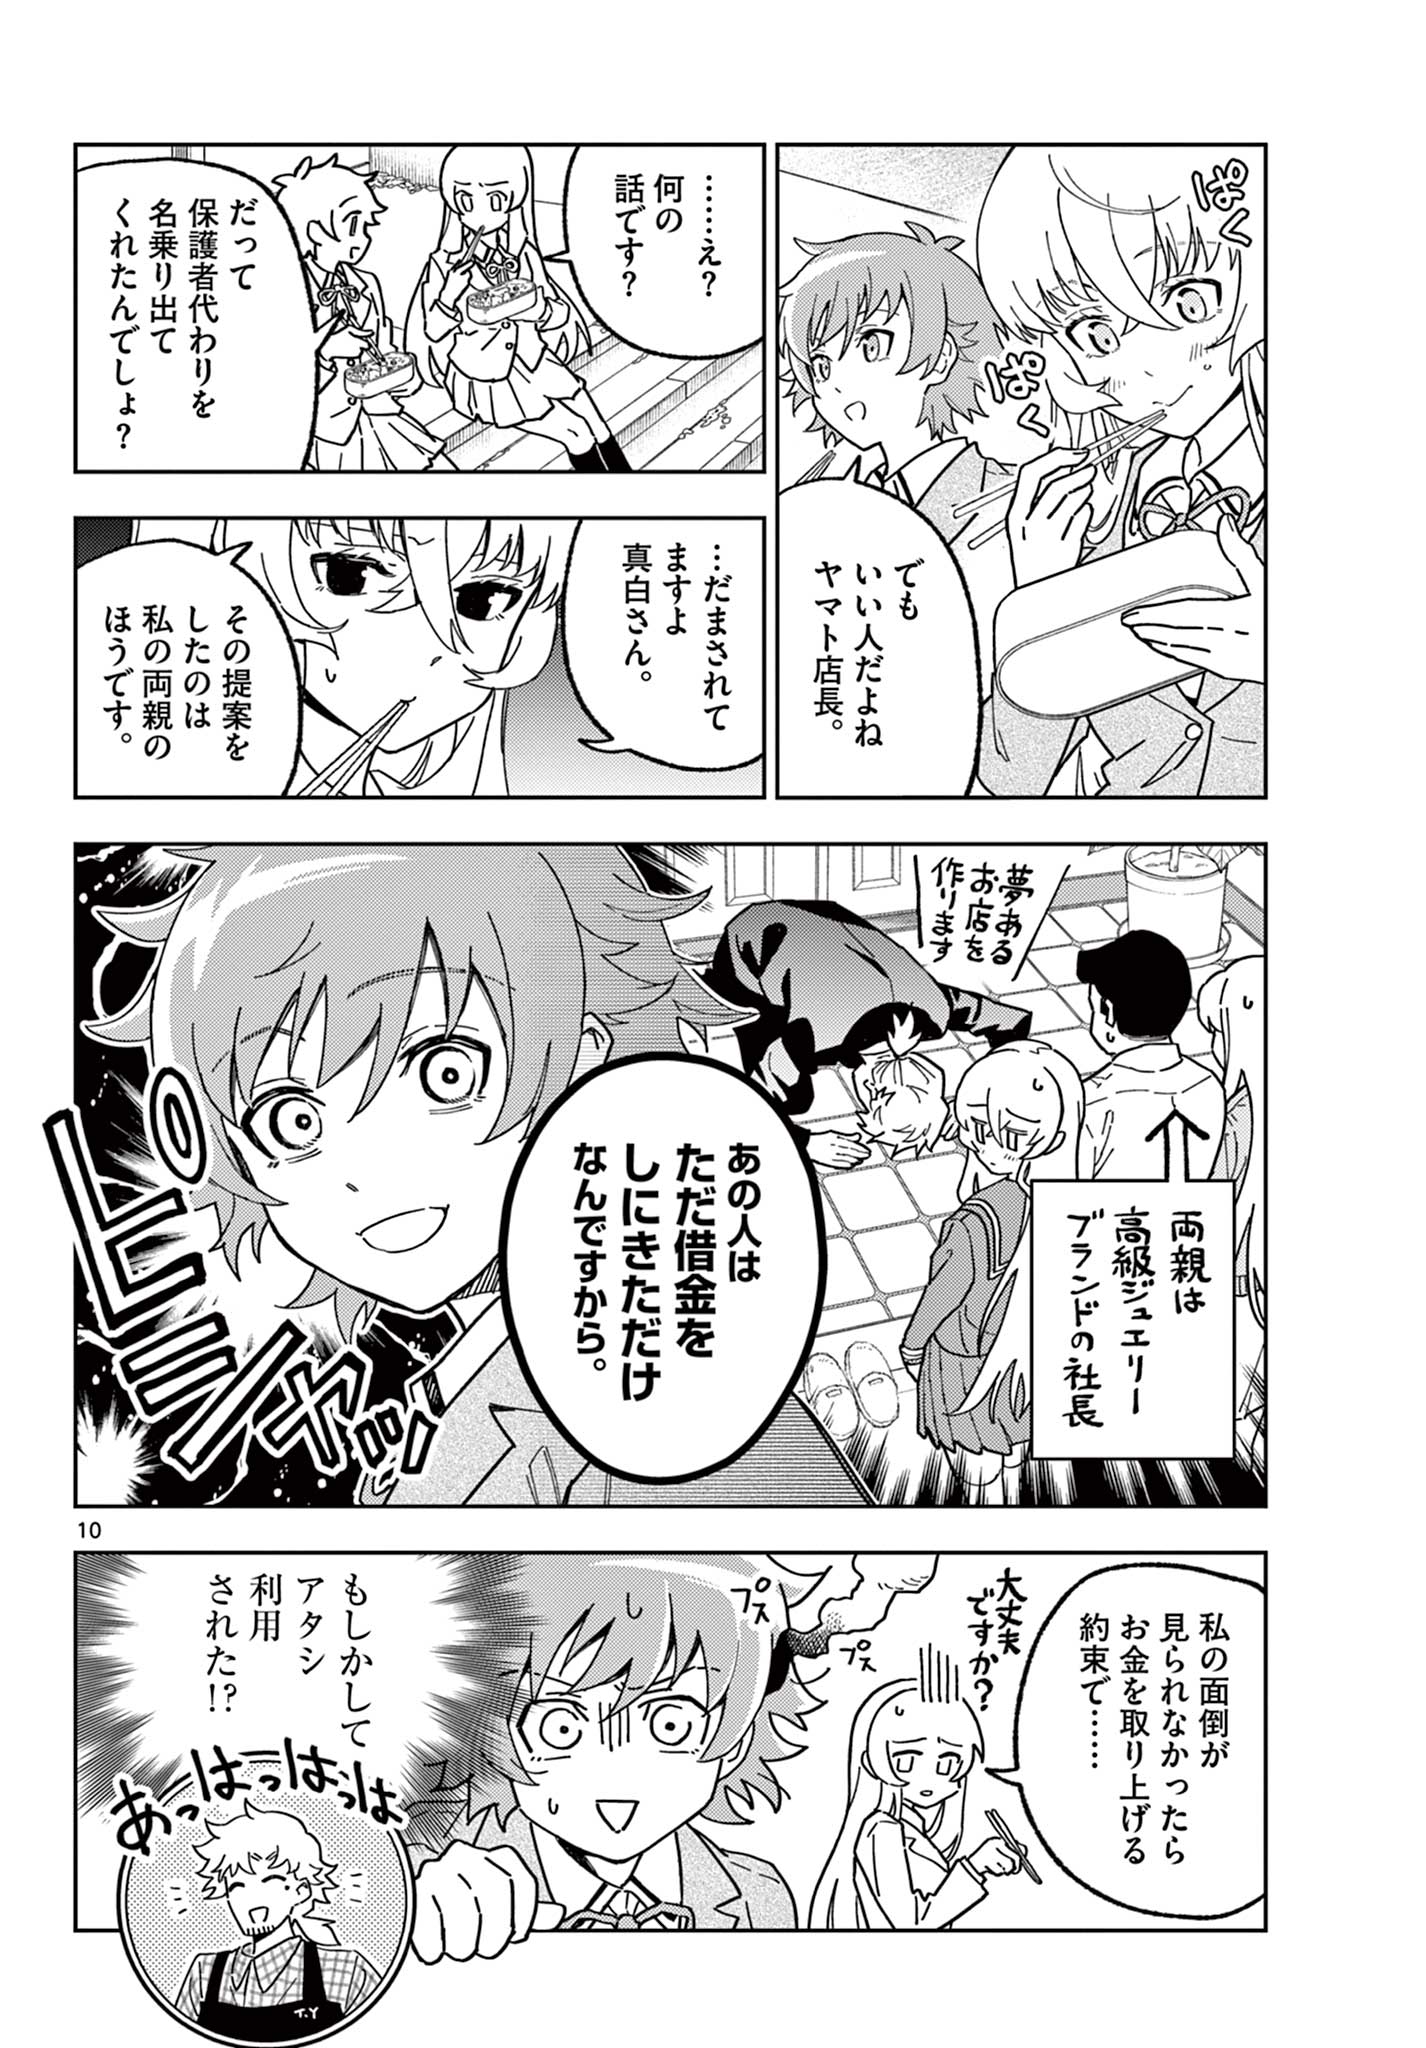 Gareki! Modeller Girls no Houkago - Chapter 4.2 - Page 10